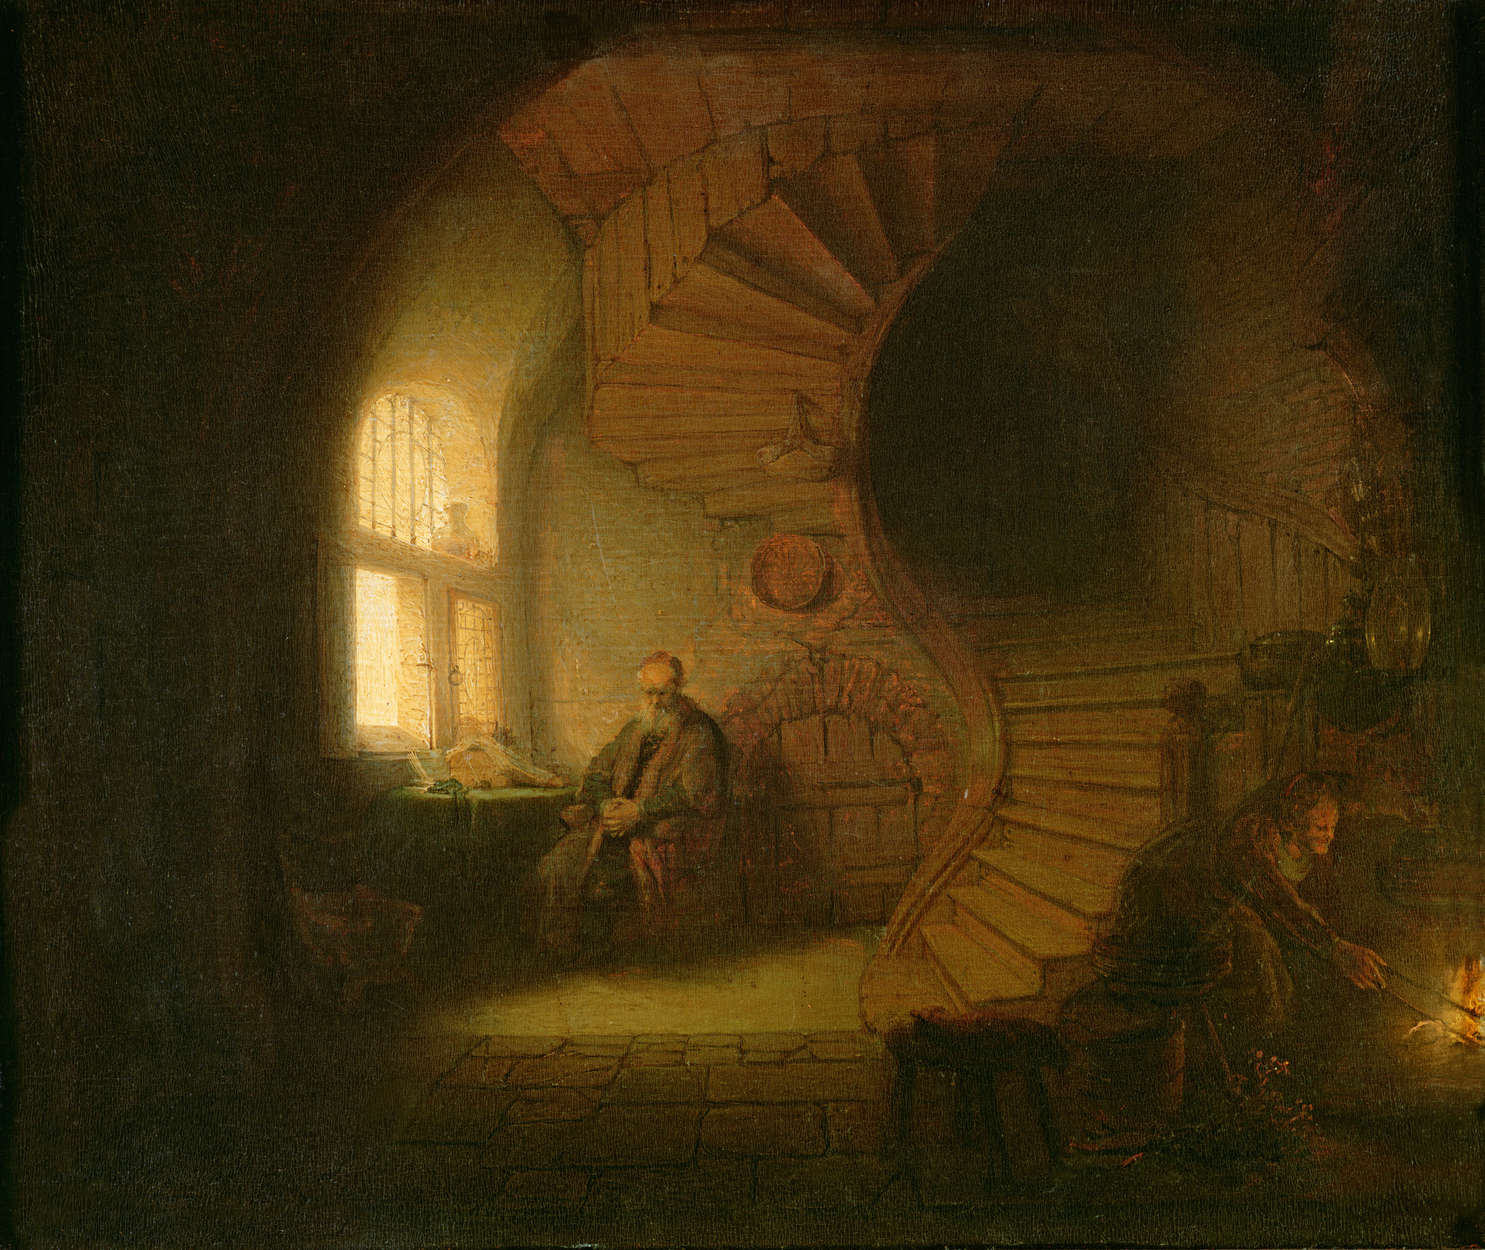             Fototapete "Philosoph in Meditation" von Rembrandt van Rijn
        